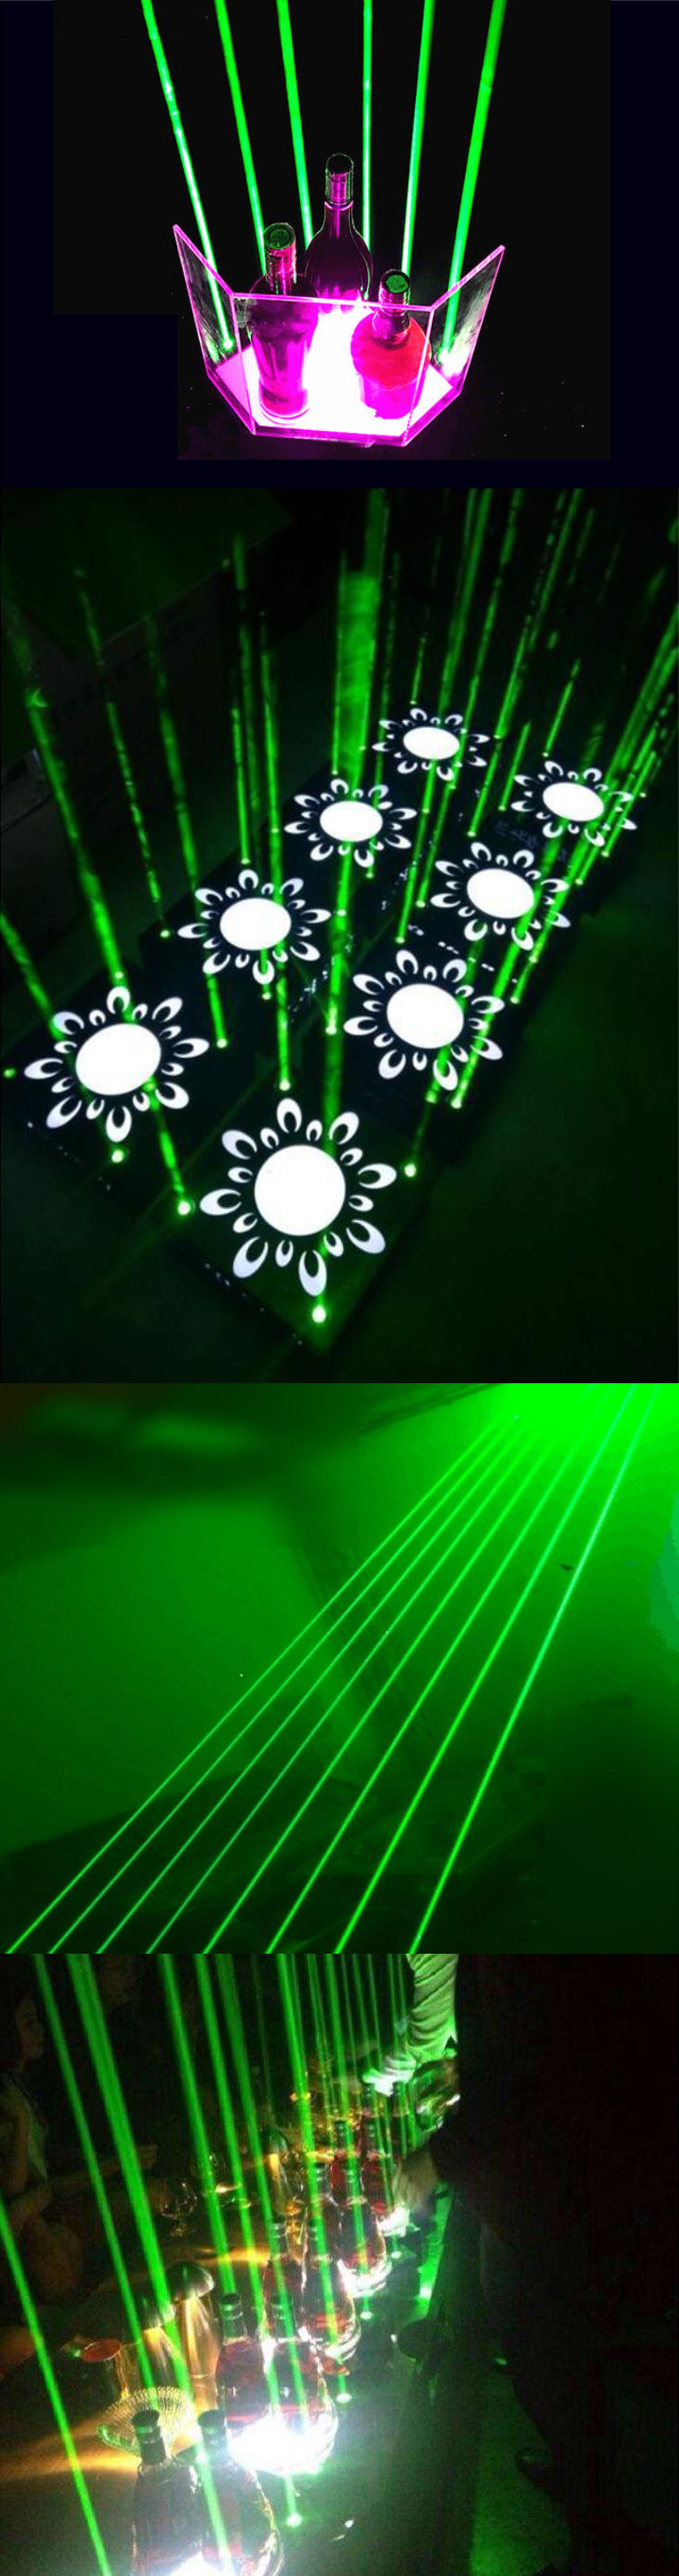 Groene lasermodule